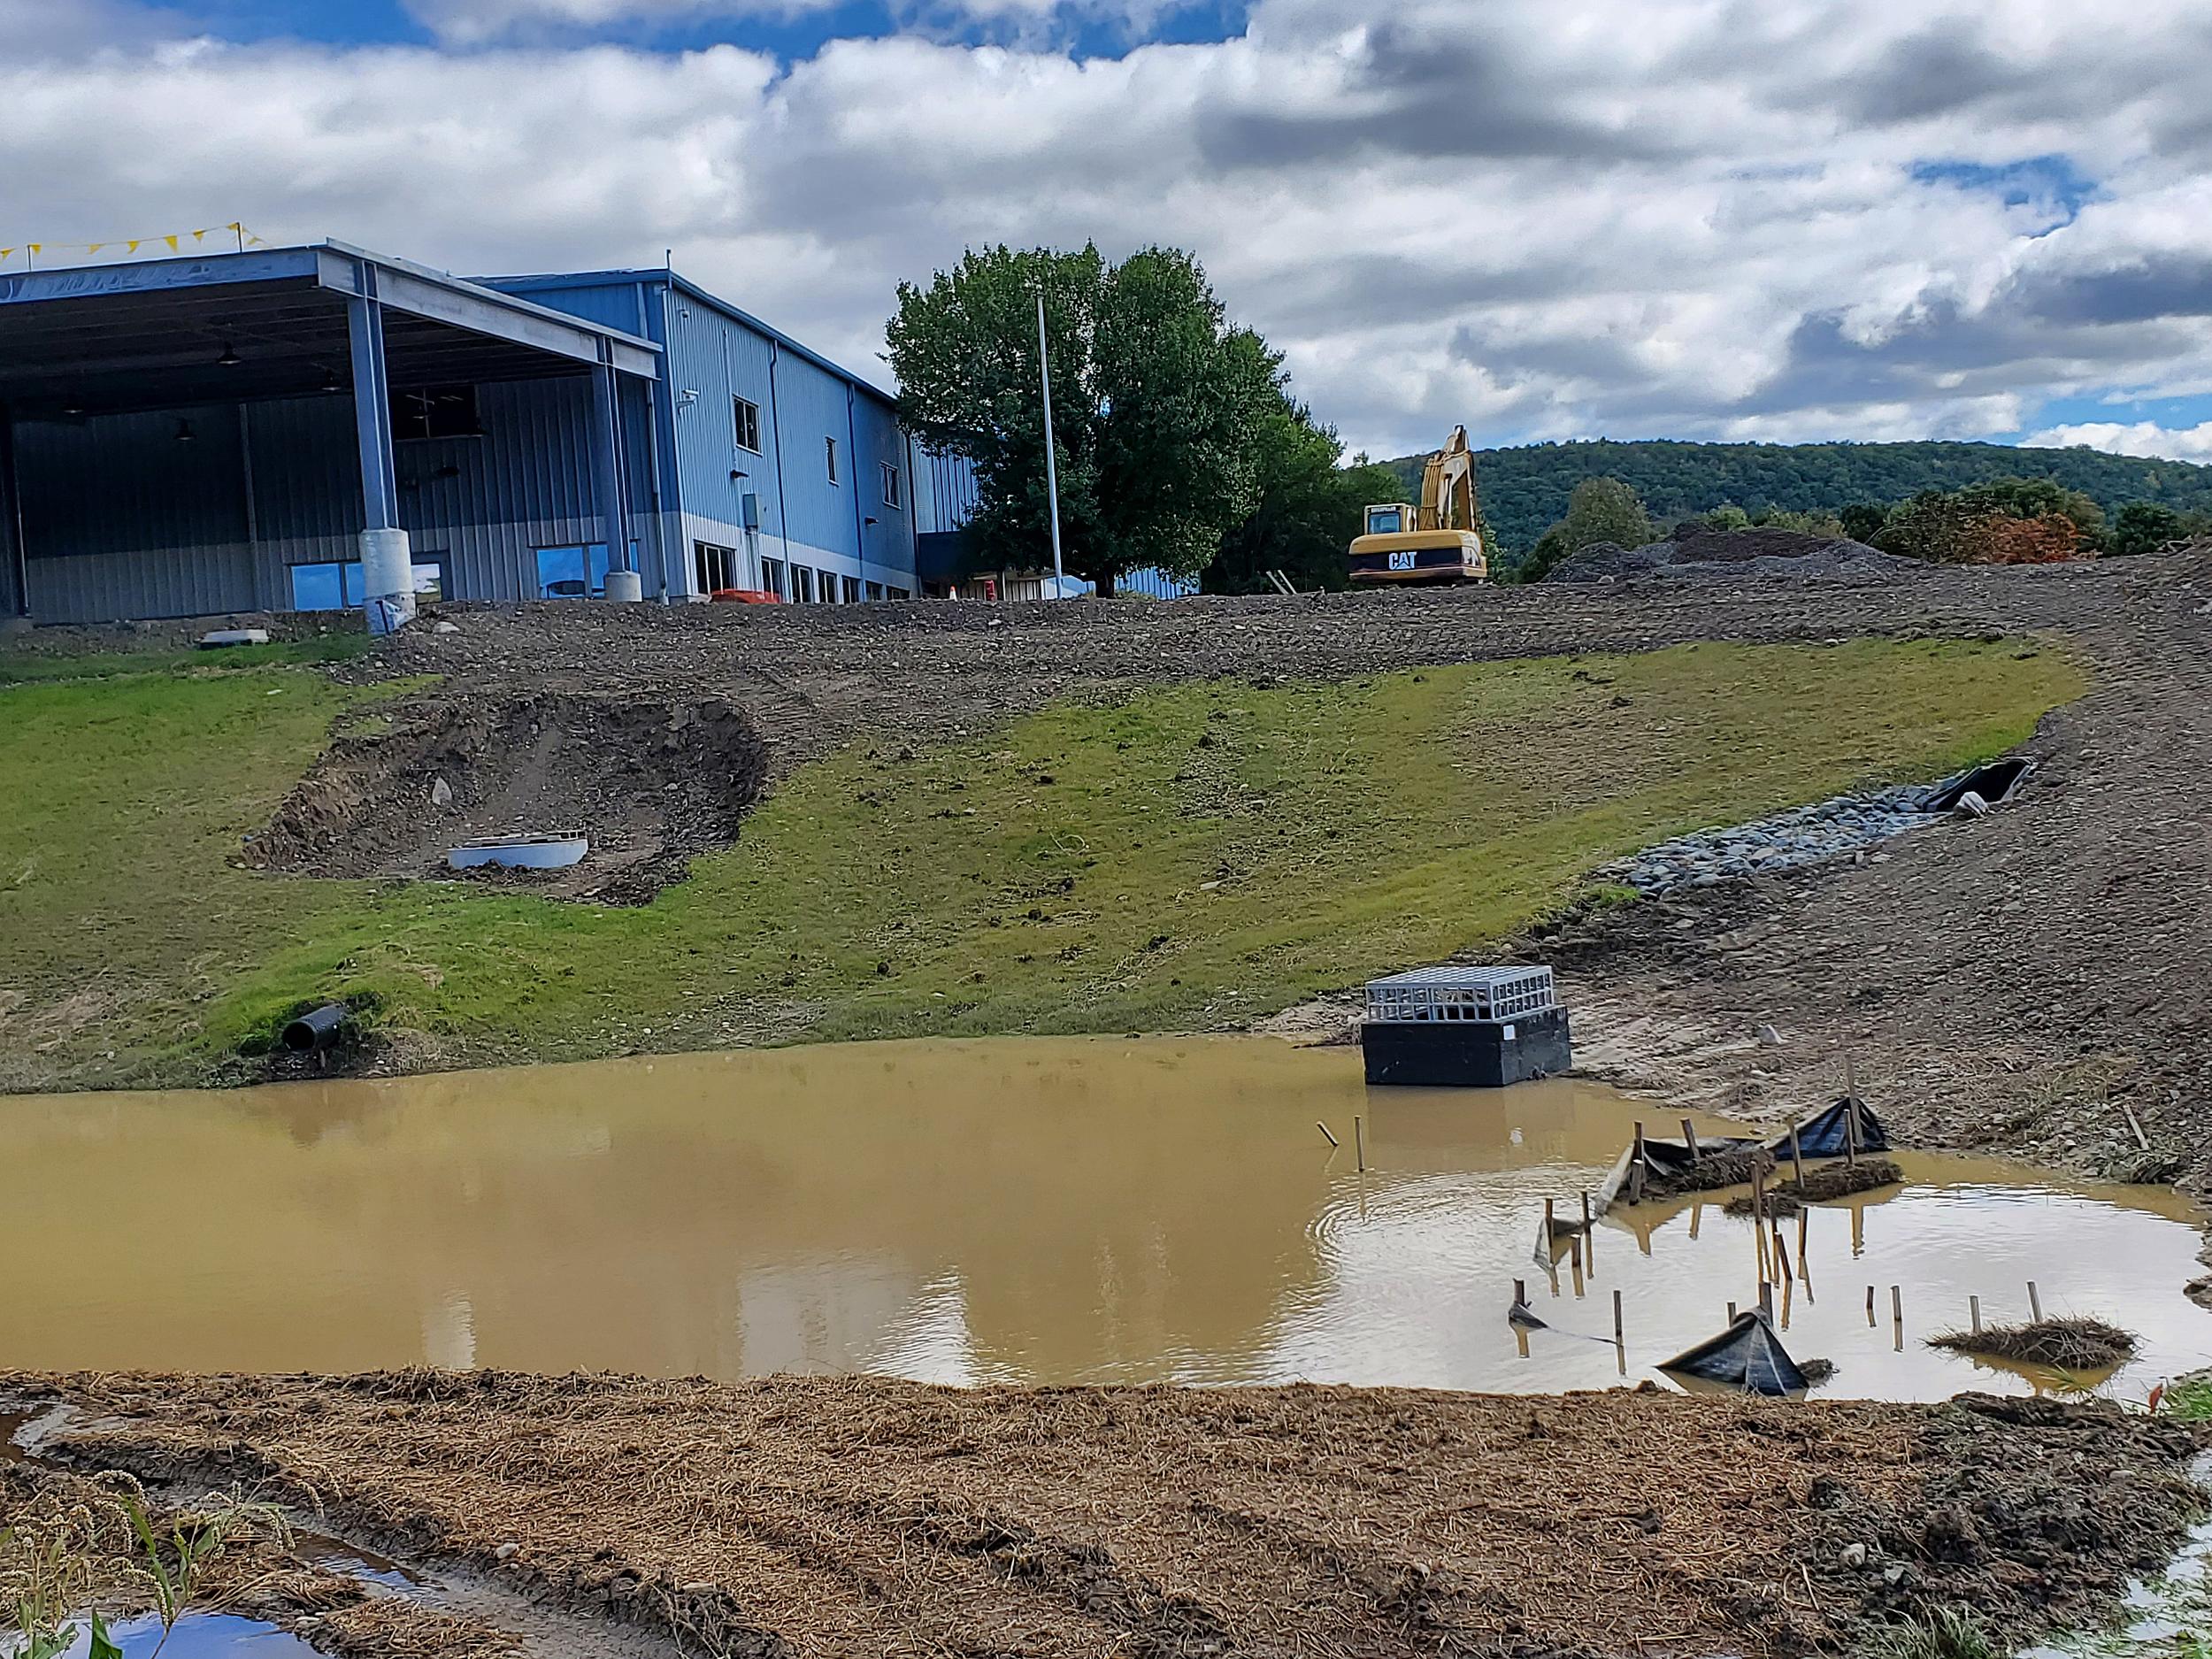 Amazon Conklin Distribution Center Construction Work Now Underway